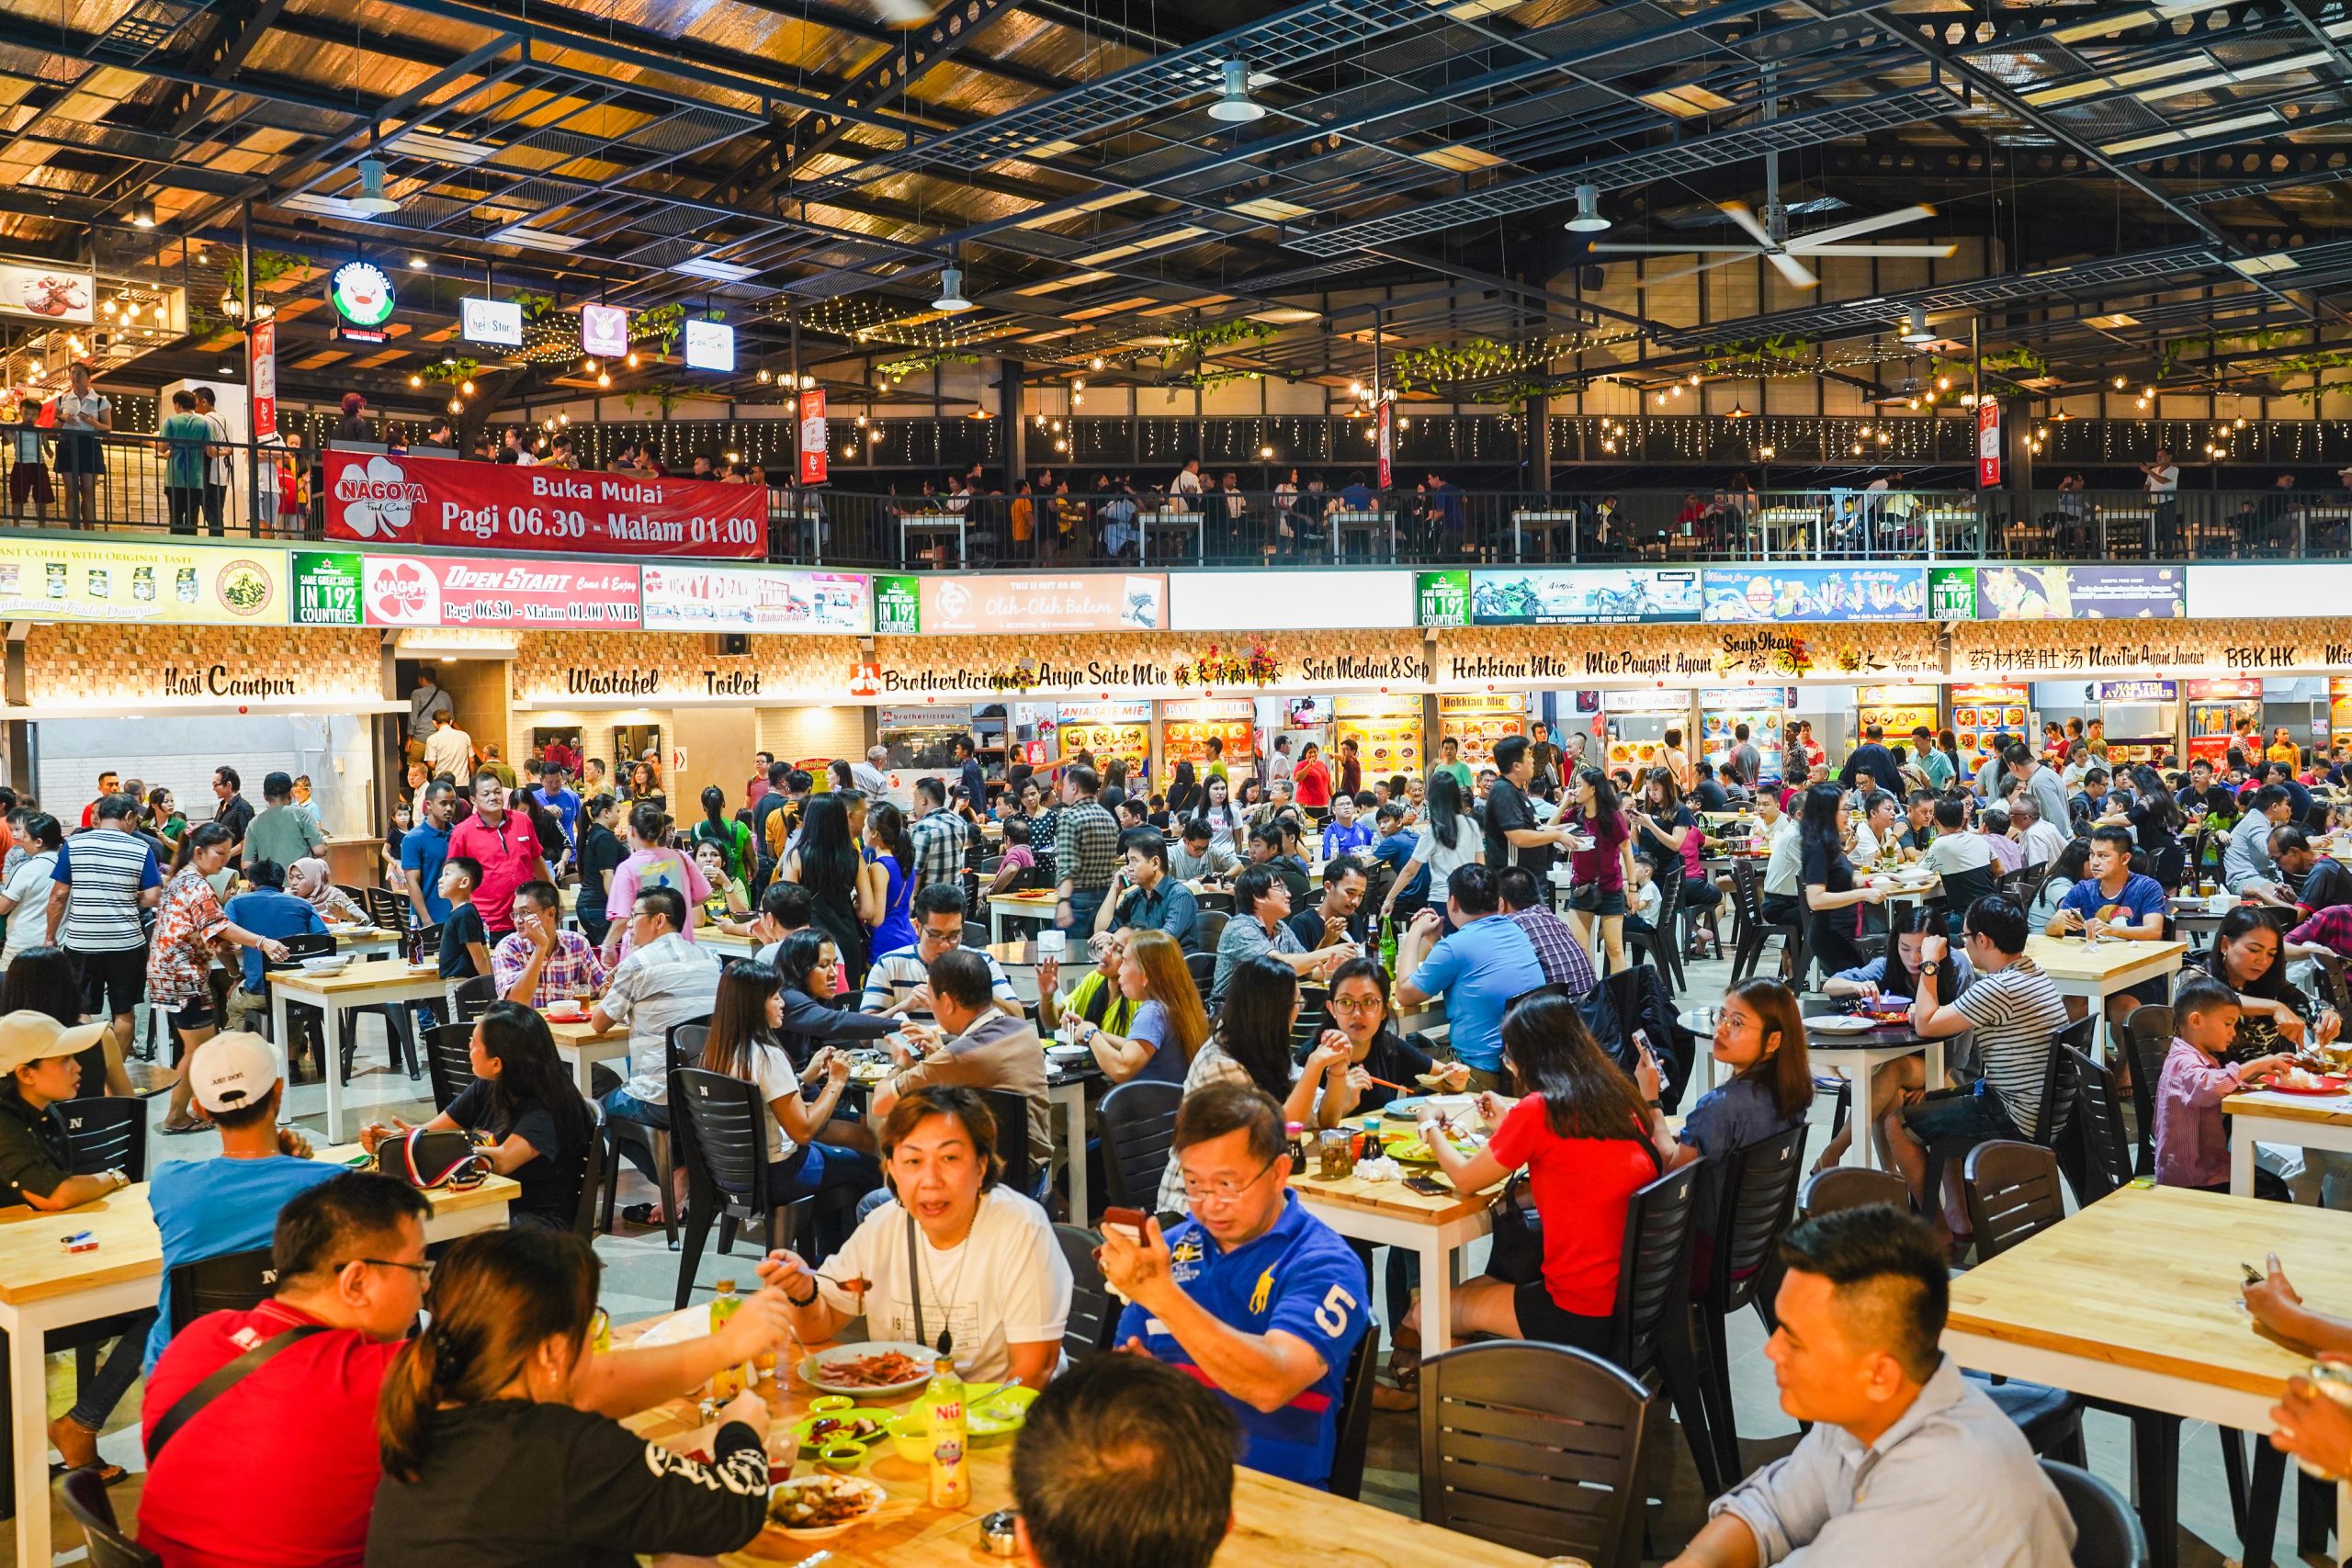 seated crowds eating at nagoya foodcourt